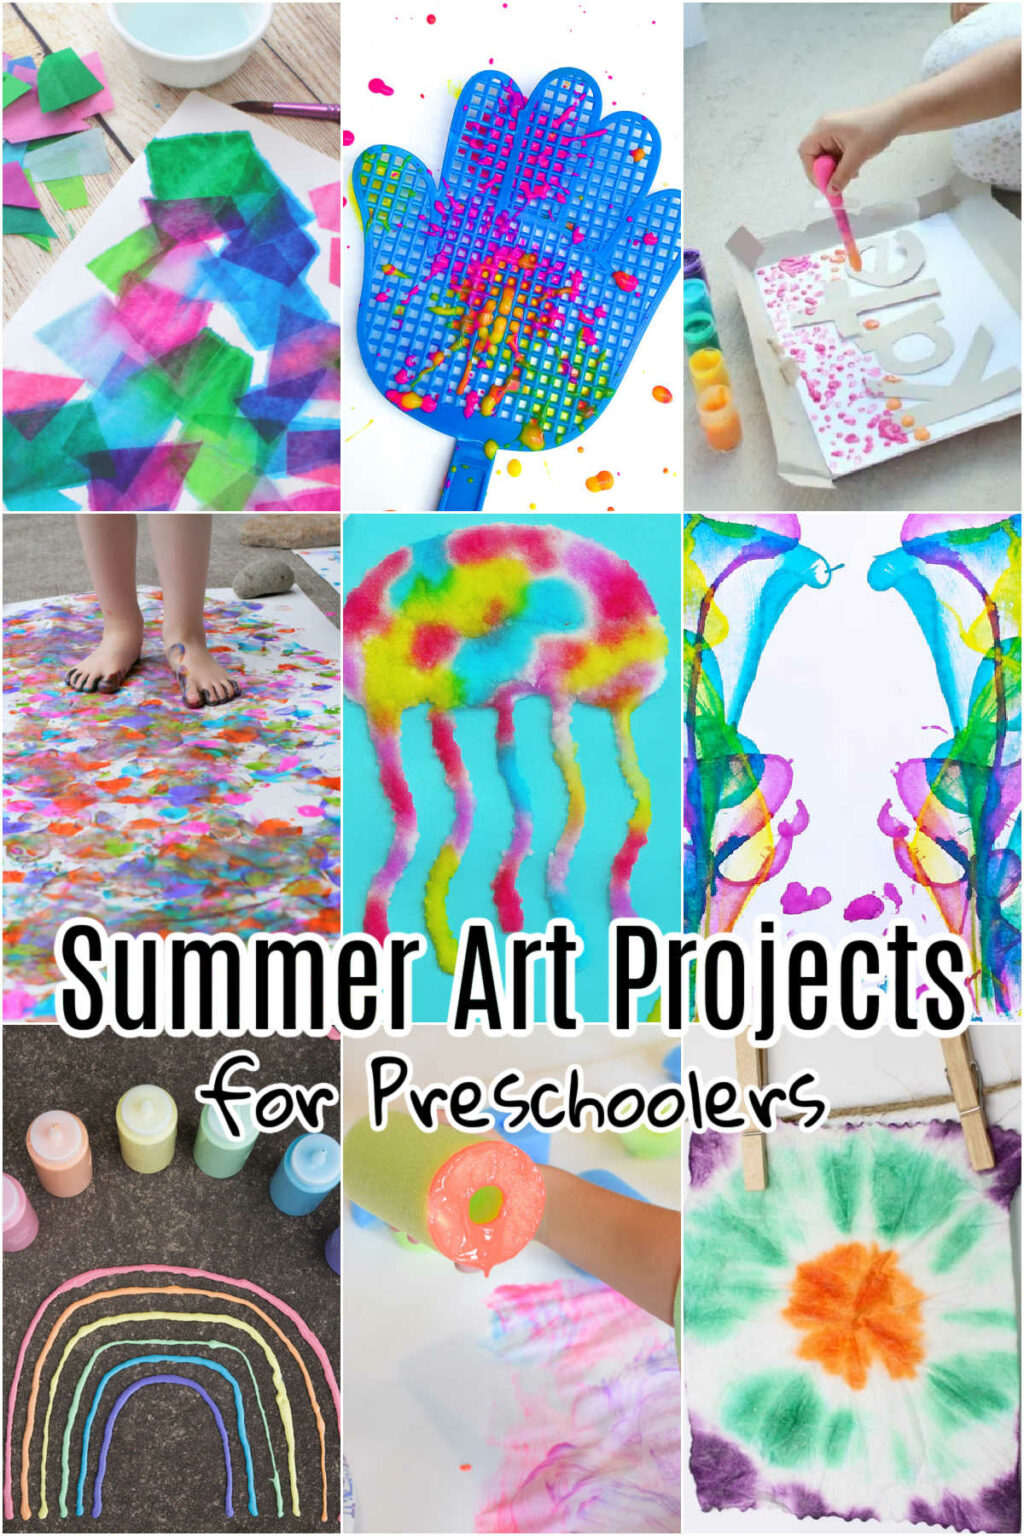 Summer Art Projects For Preschoolers 1024x1536 